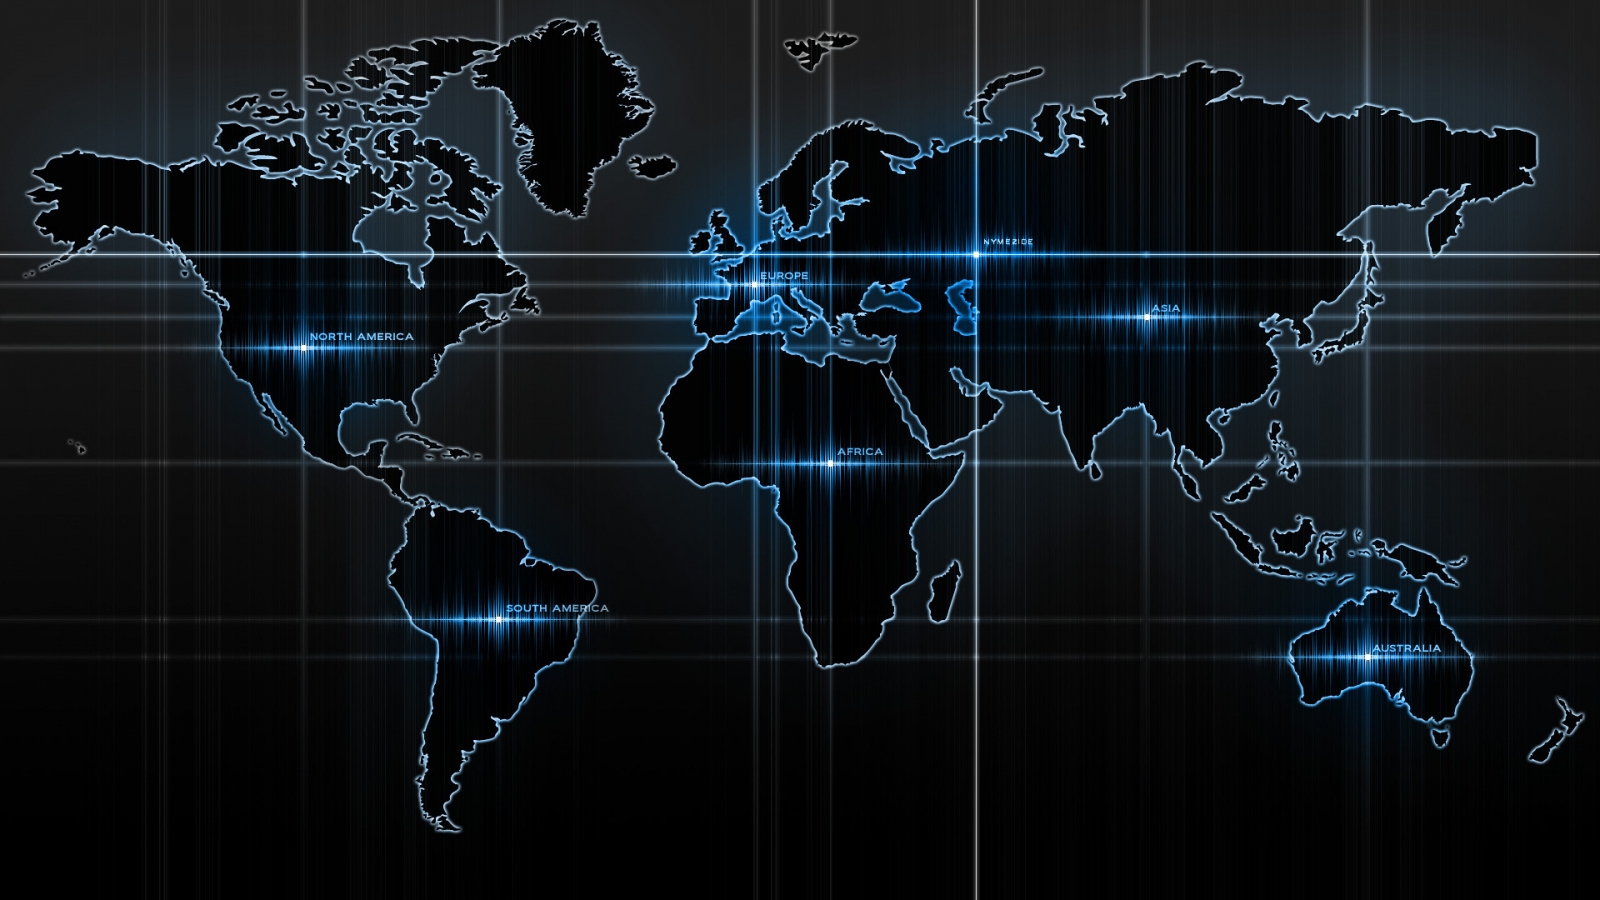 World Map for 1600 x 900 HDTV resolution